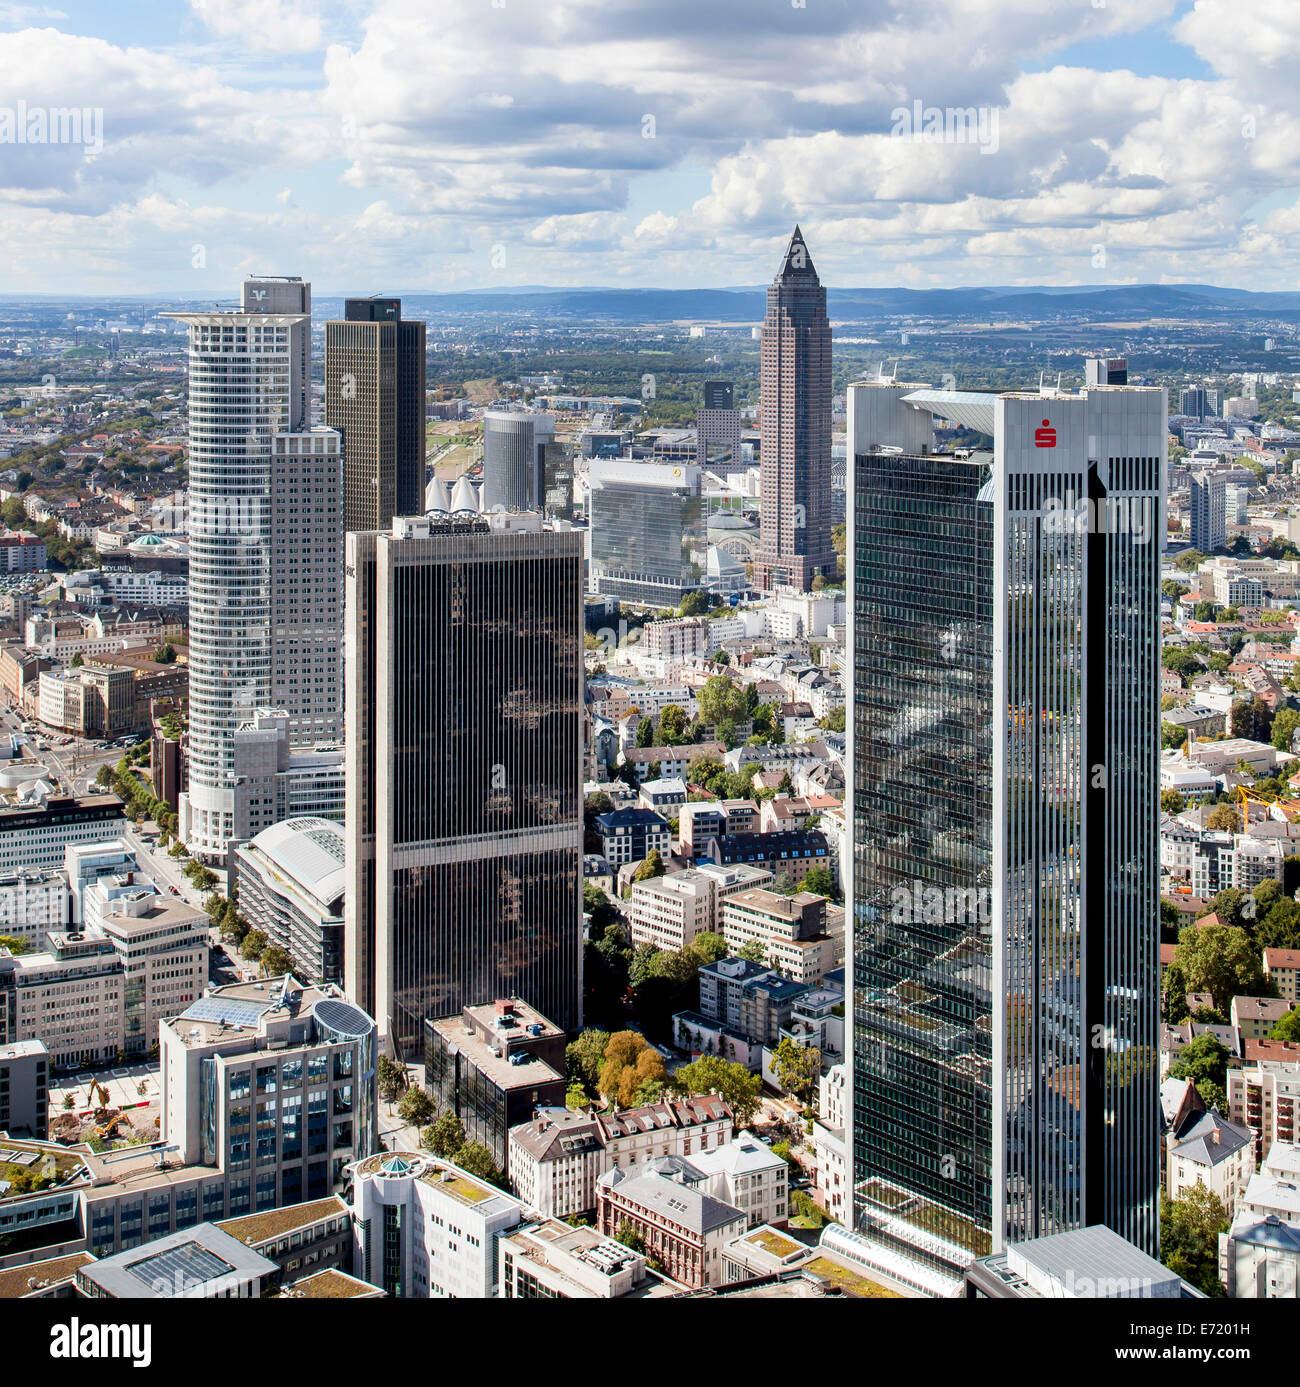 Skyscrapers with Trianon, Sparkasse, FBC Frankfurt Office Centre buildings, Trade Fair Tower, Messeturm Stock Photo